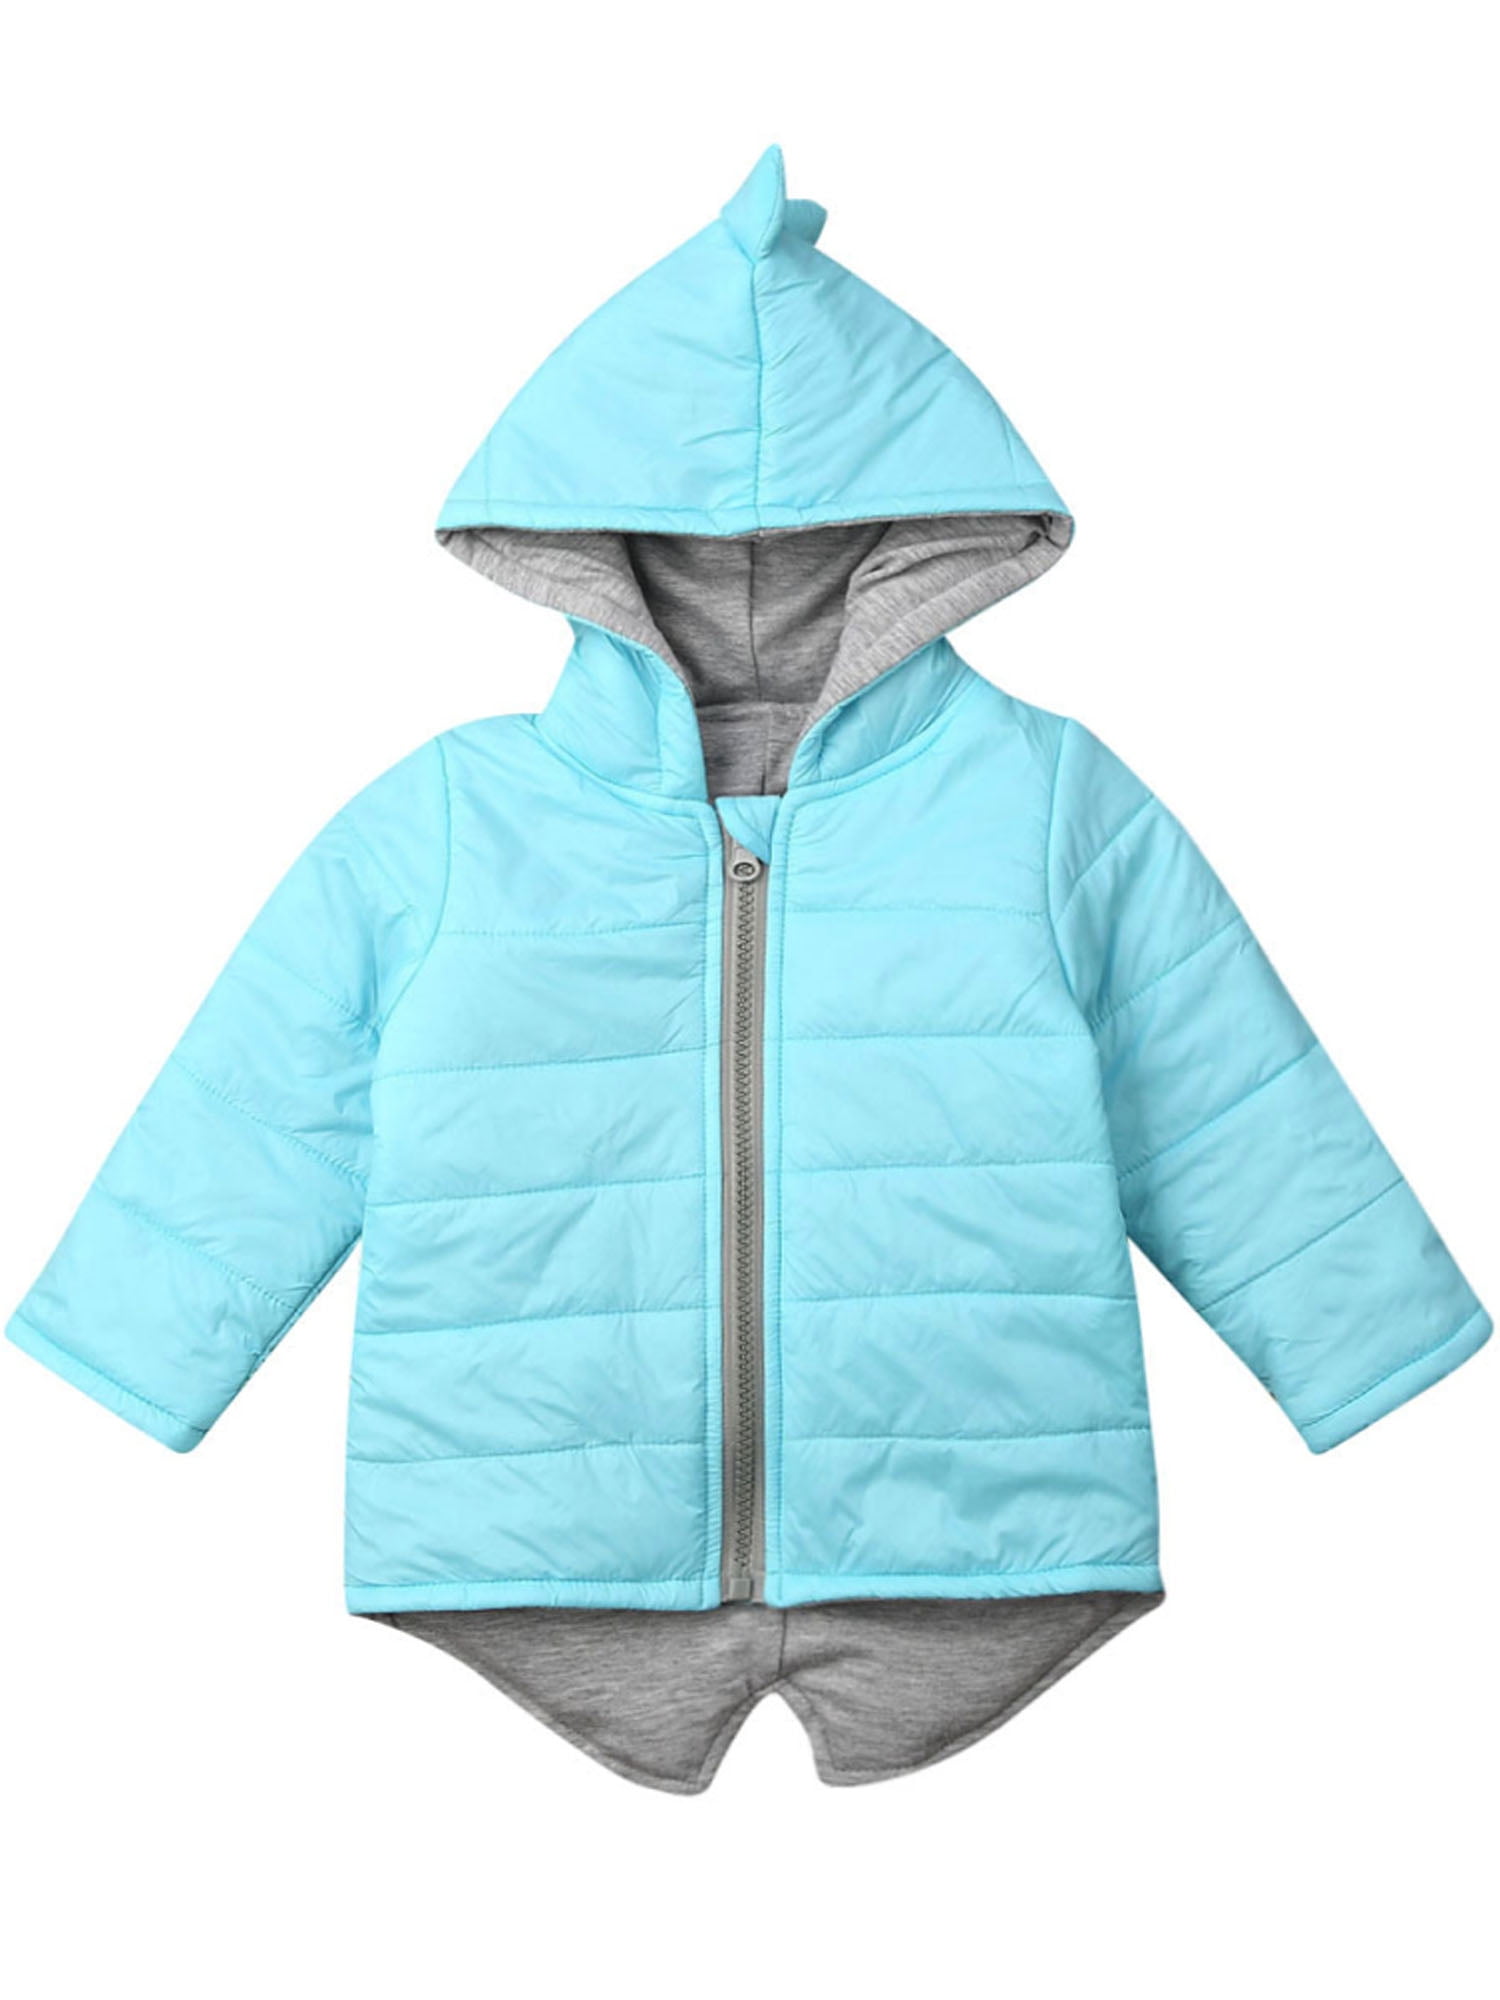 Toddler Baby Girls Boys Dinosaur Sleeveless Hoodie Vest Sleeveless Waistcoat Winter Warm Jacket Outwear with Zipper 